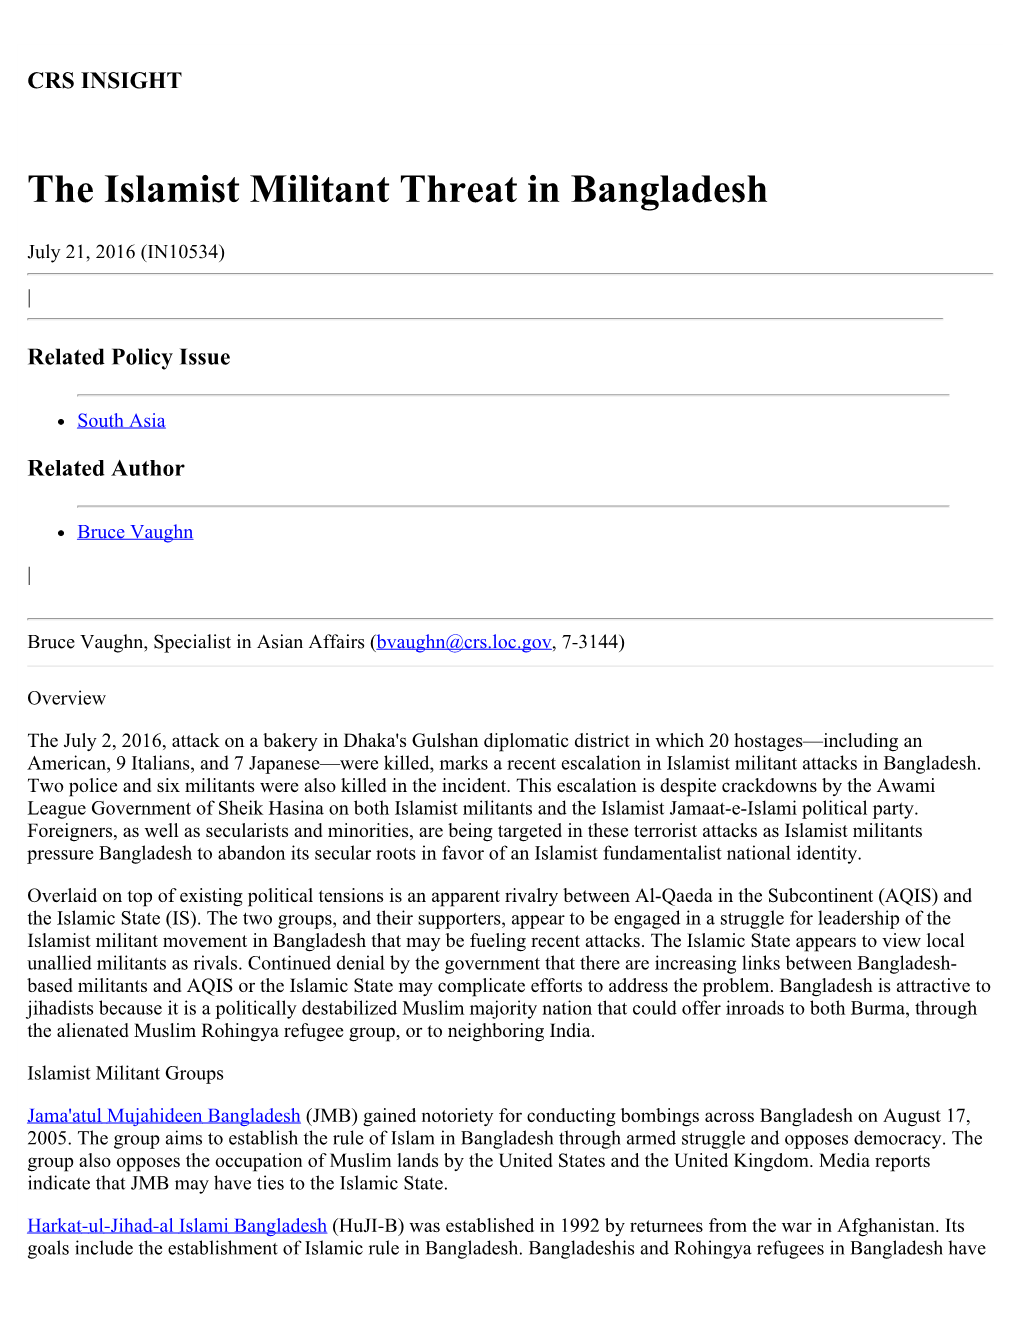 The Islamist Militant Threat in Bangladesh